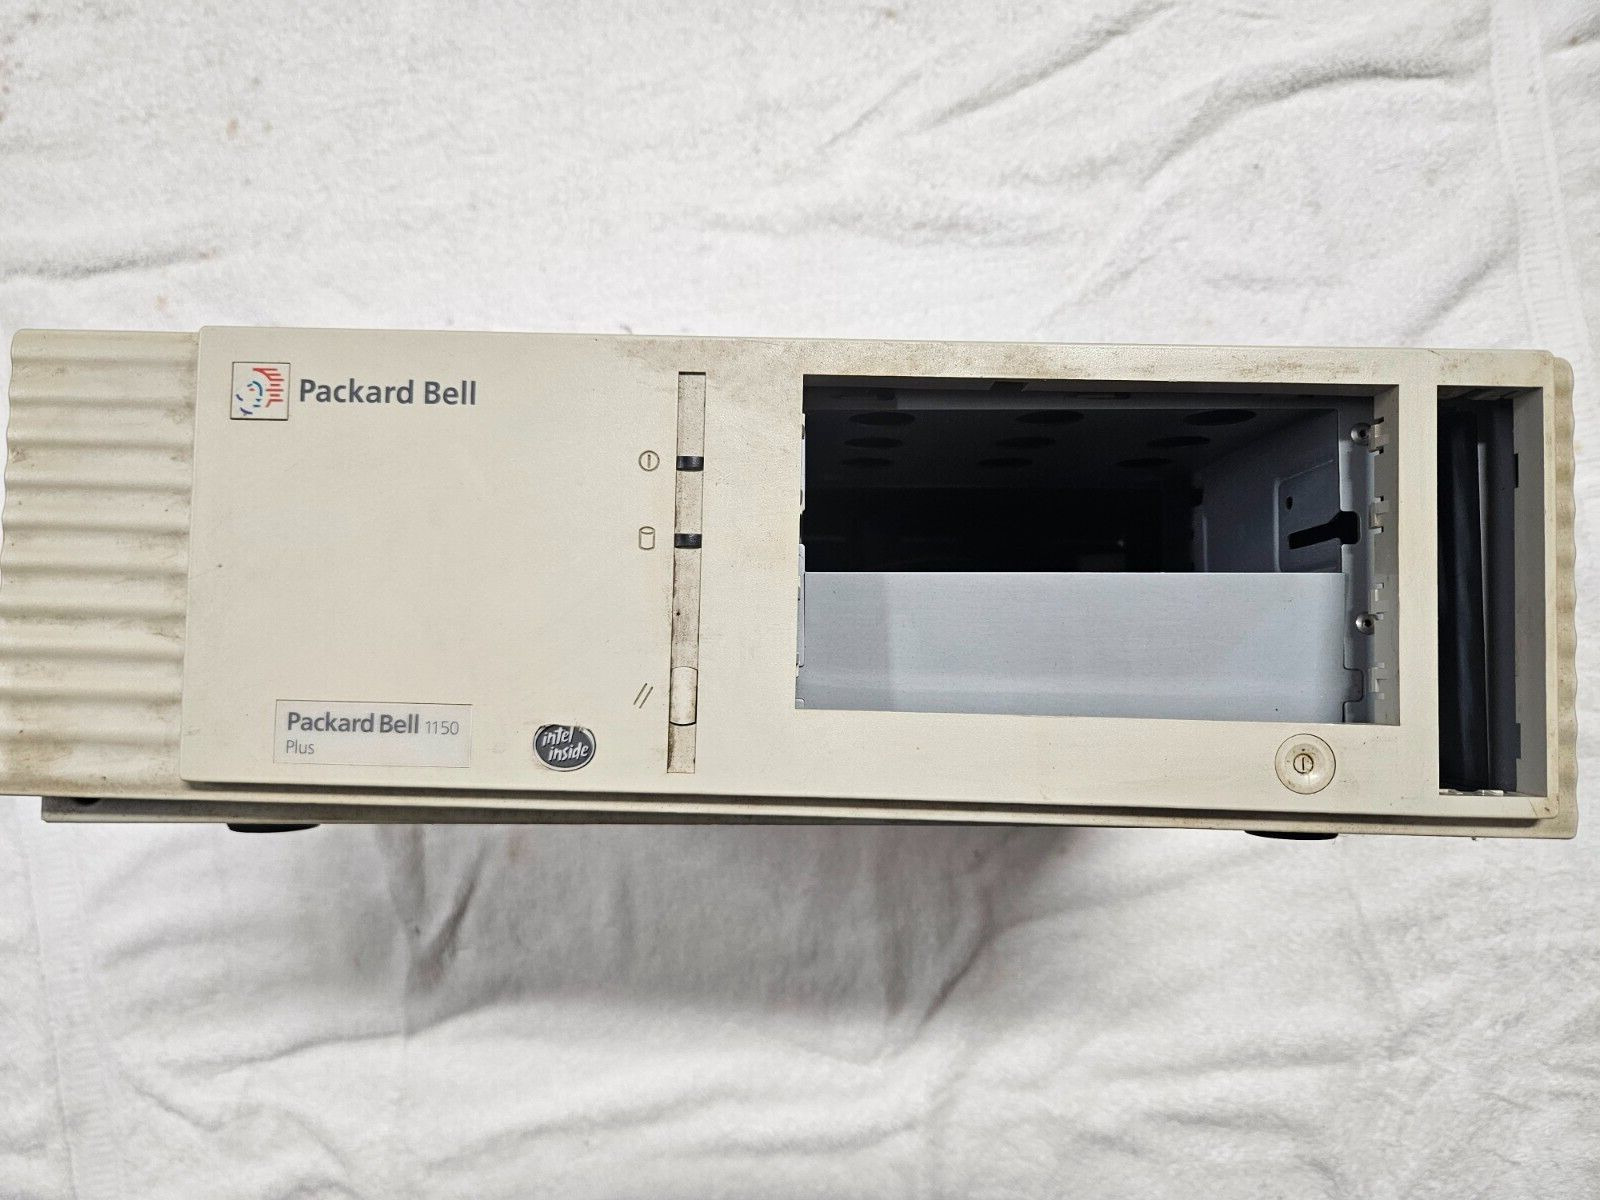 Vintage 1994 Packard Bell 1150 Plus PB411a Desktop Personal Computer - No Drives